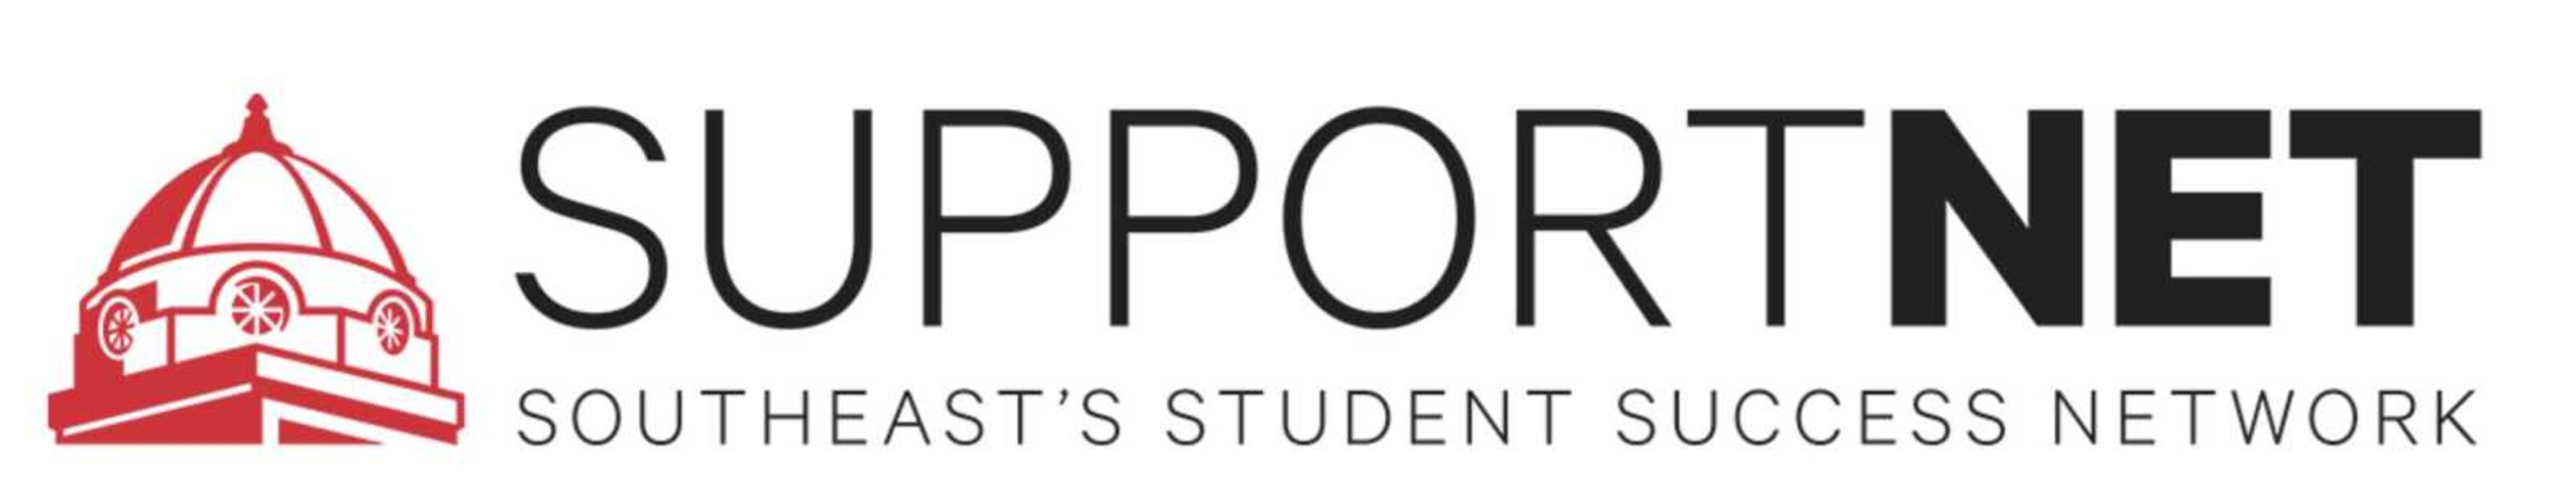 Screenshot of SupportNET logo from the website. 